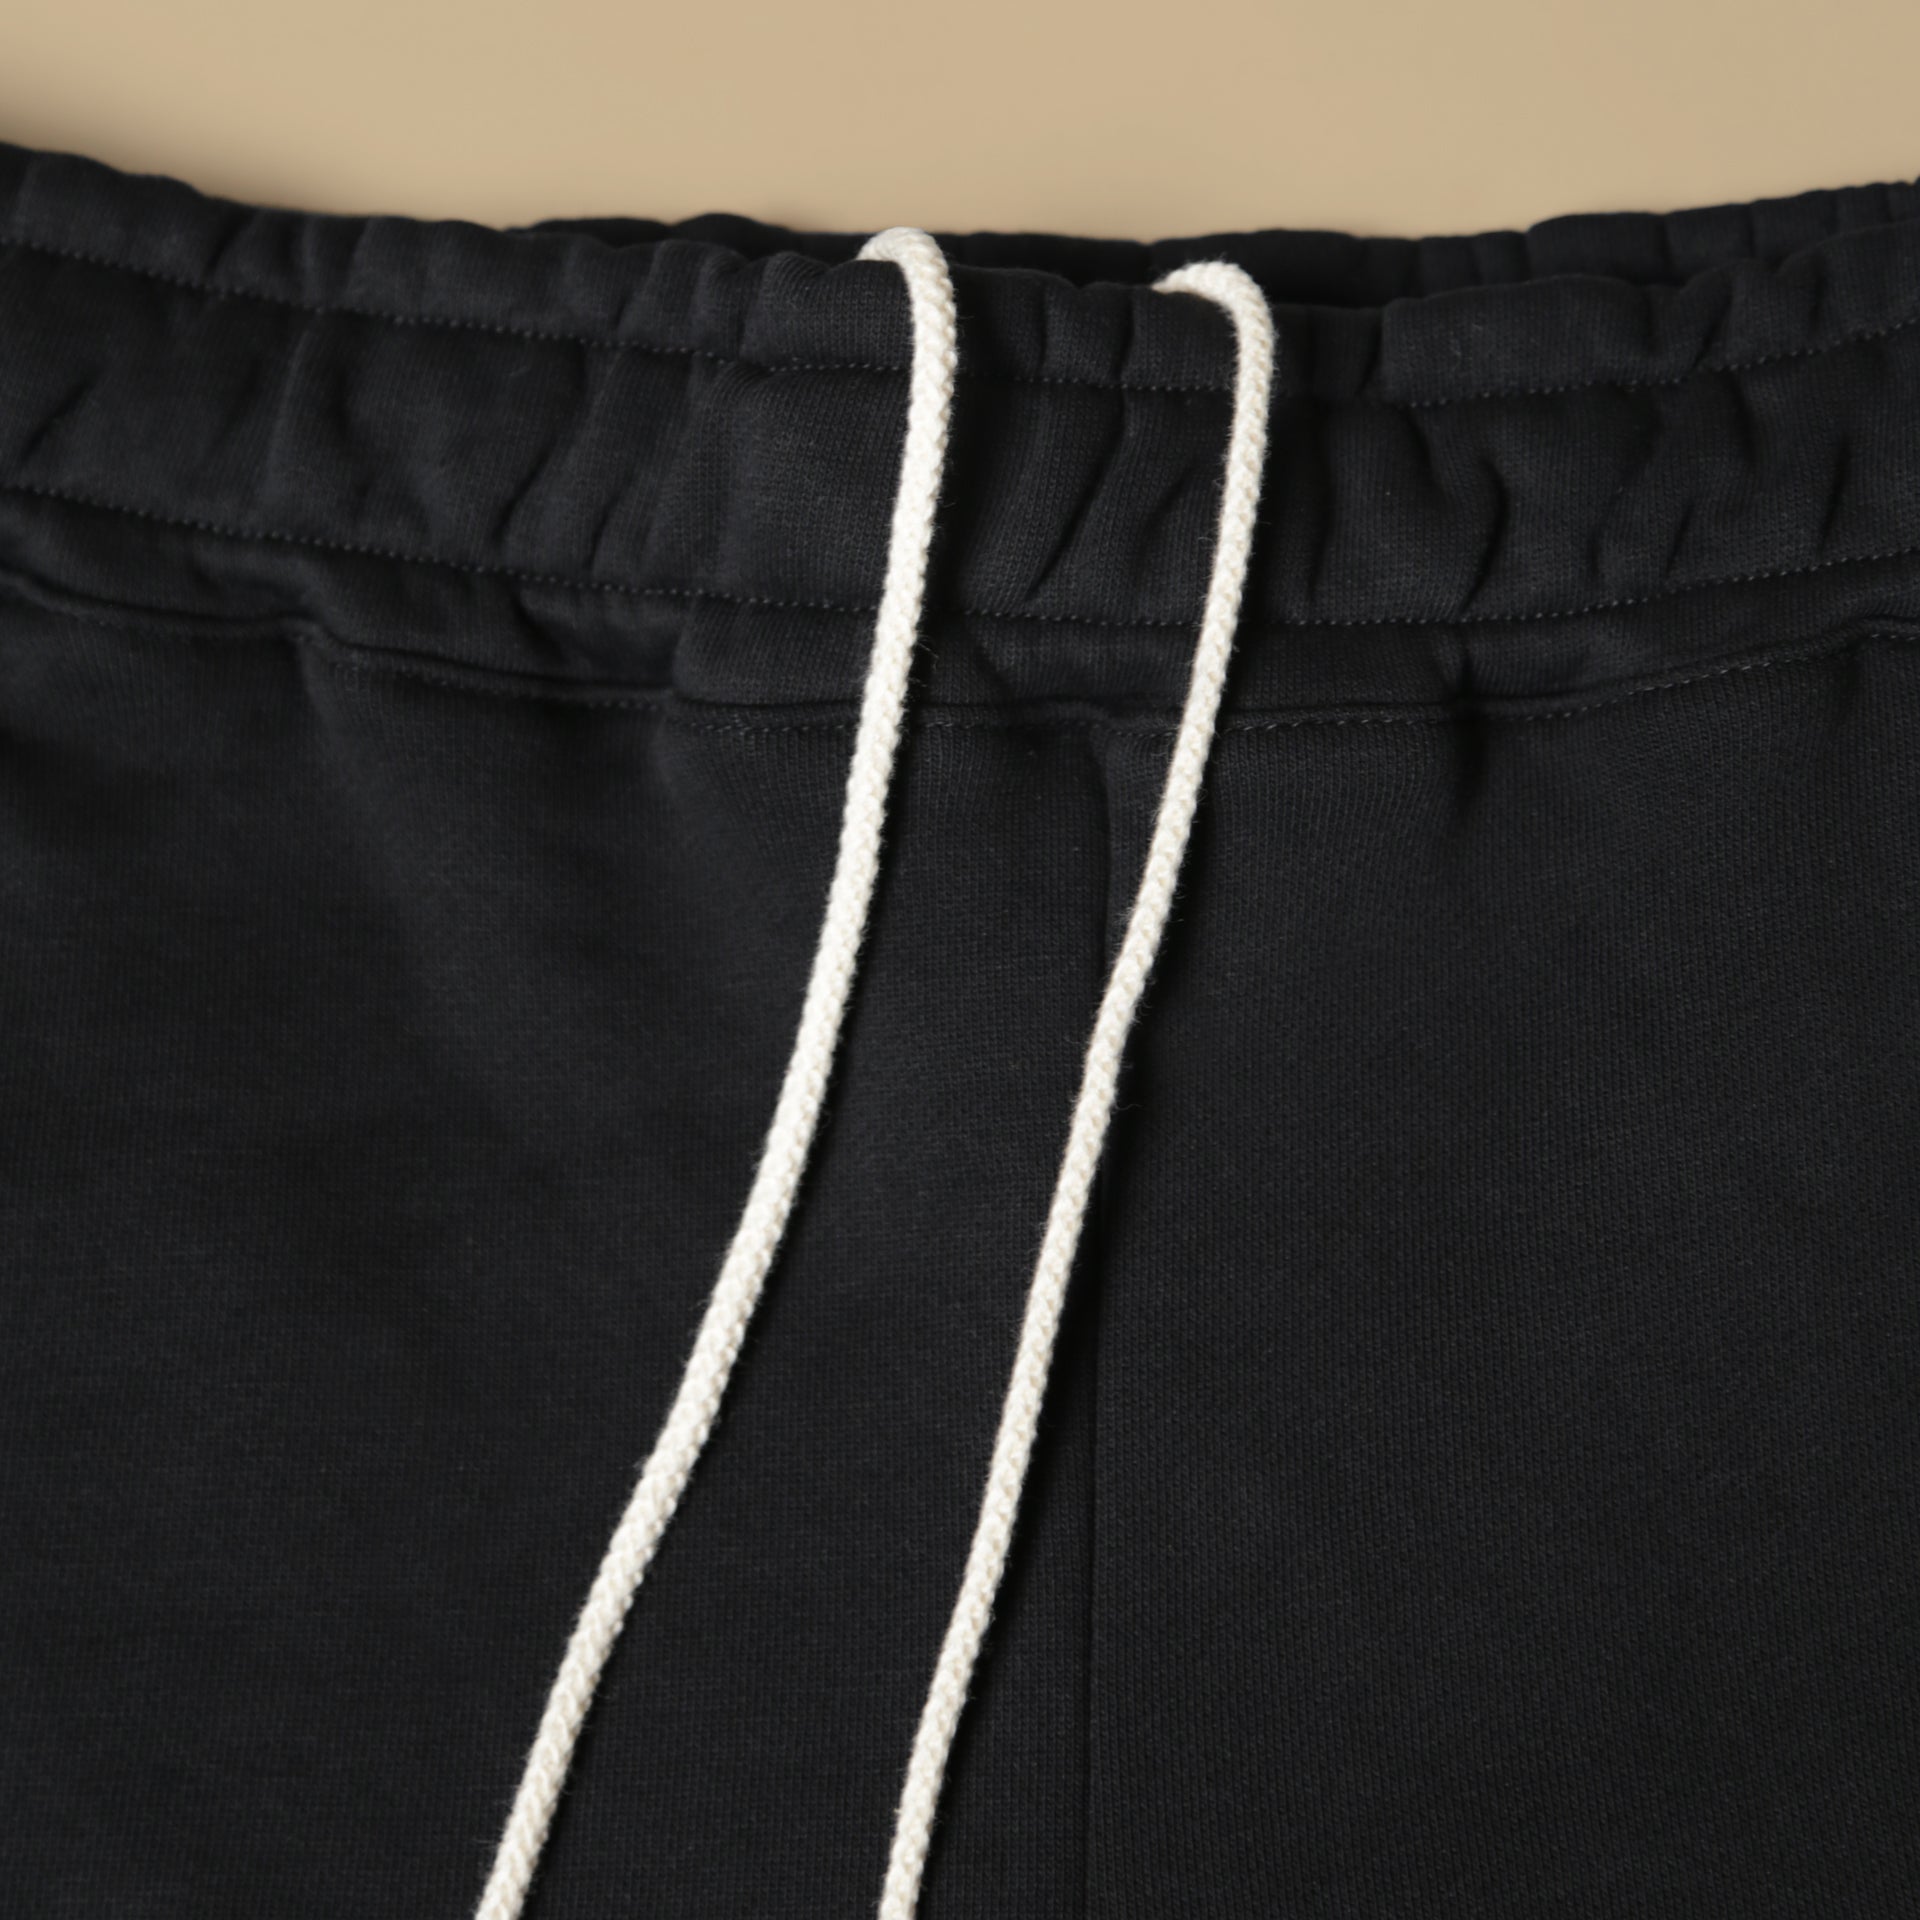 Roamer Shorts - Black Sweat Short